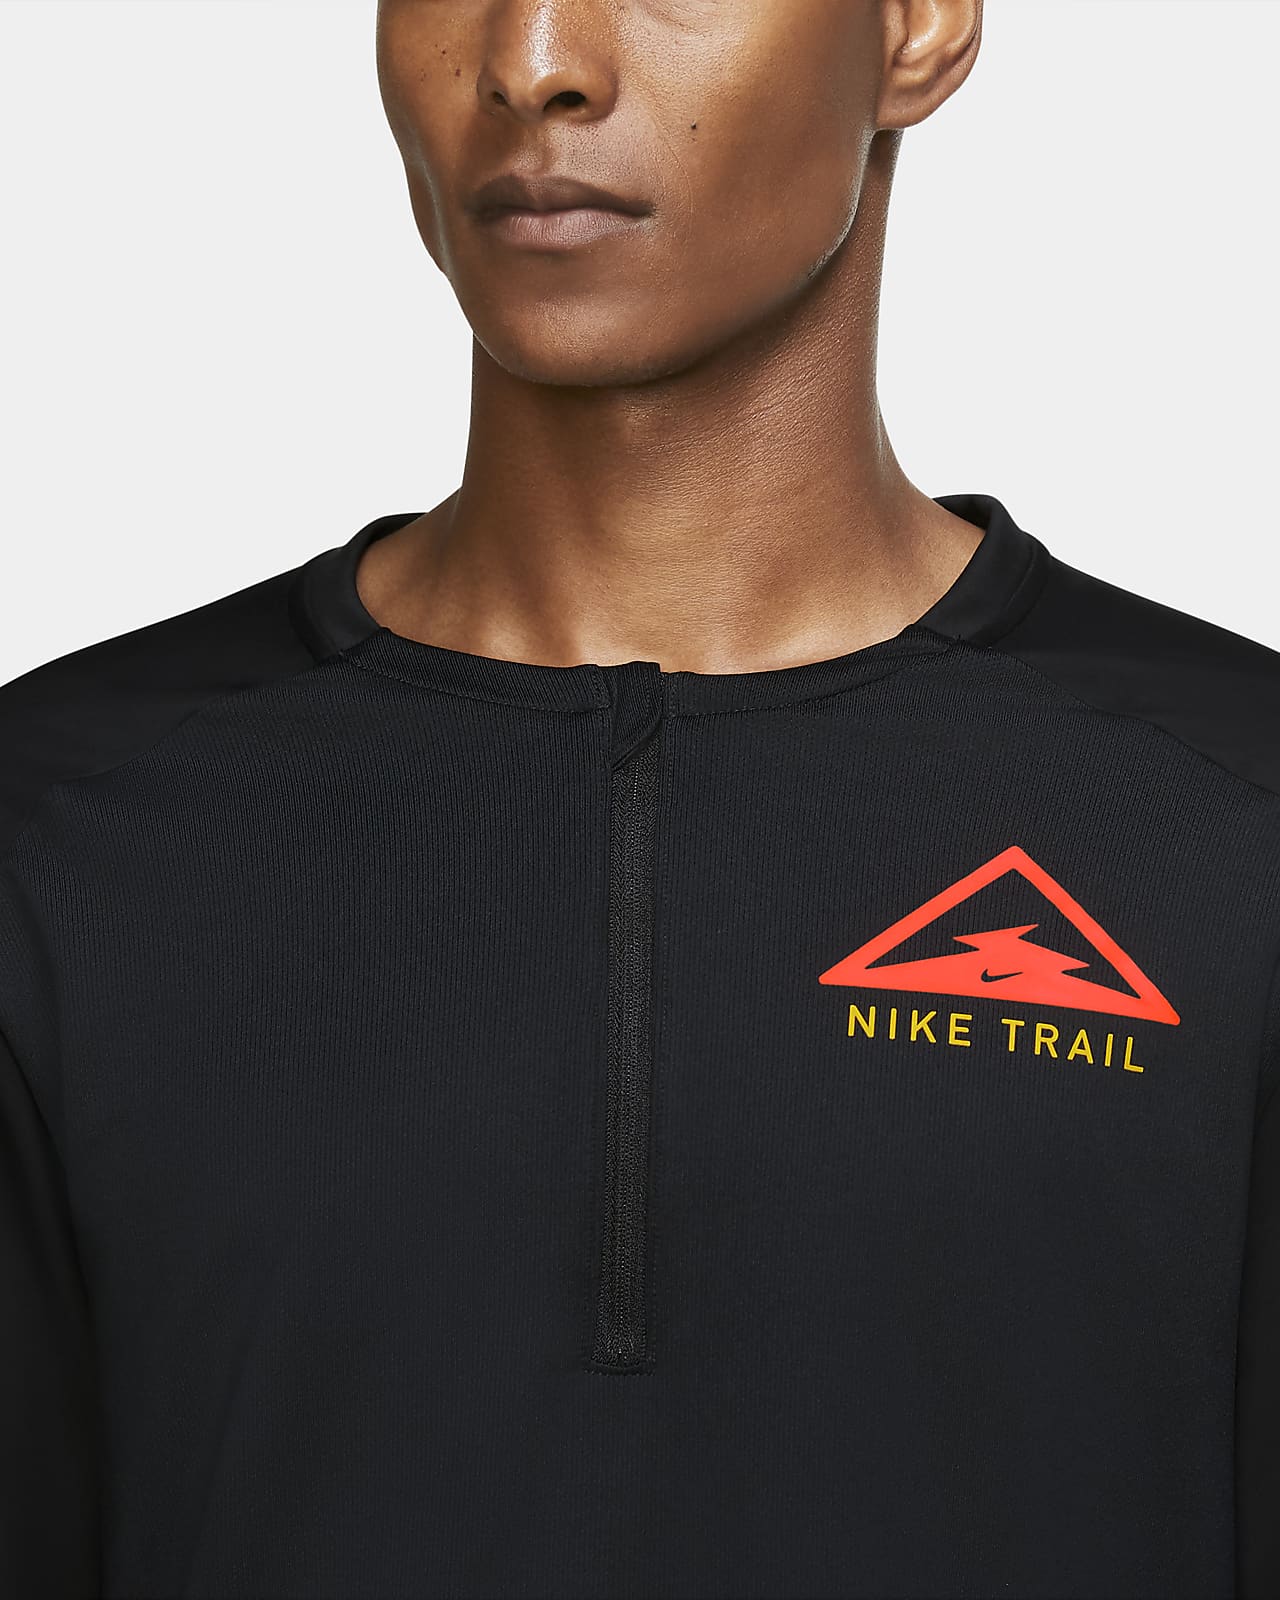 Long-Sleeve Trail Running Top. Nike LU